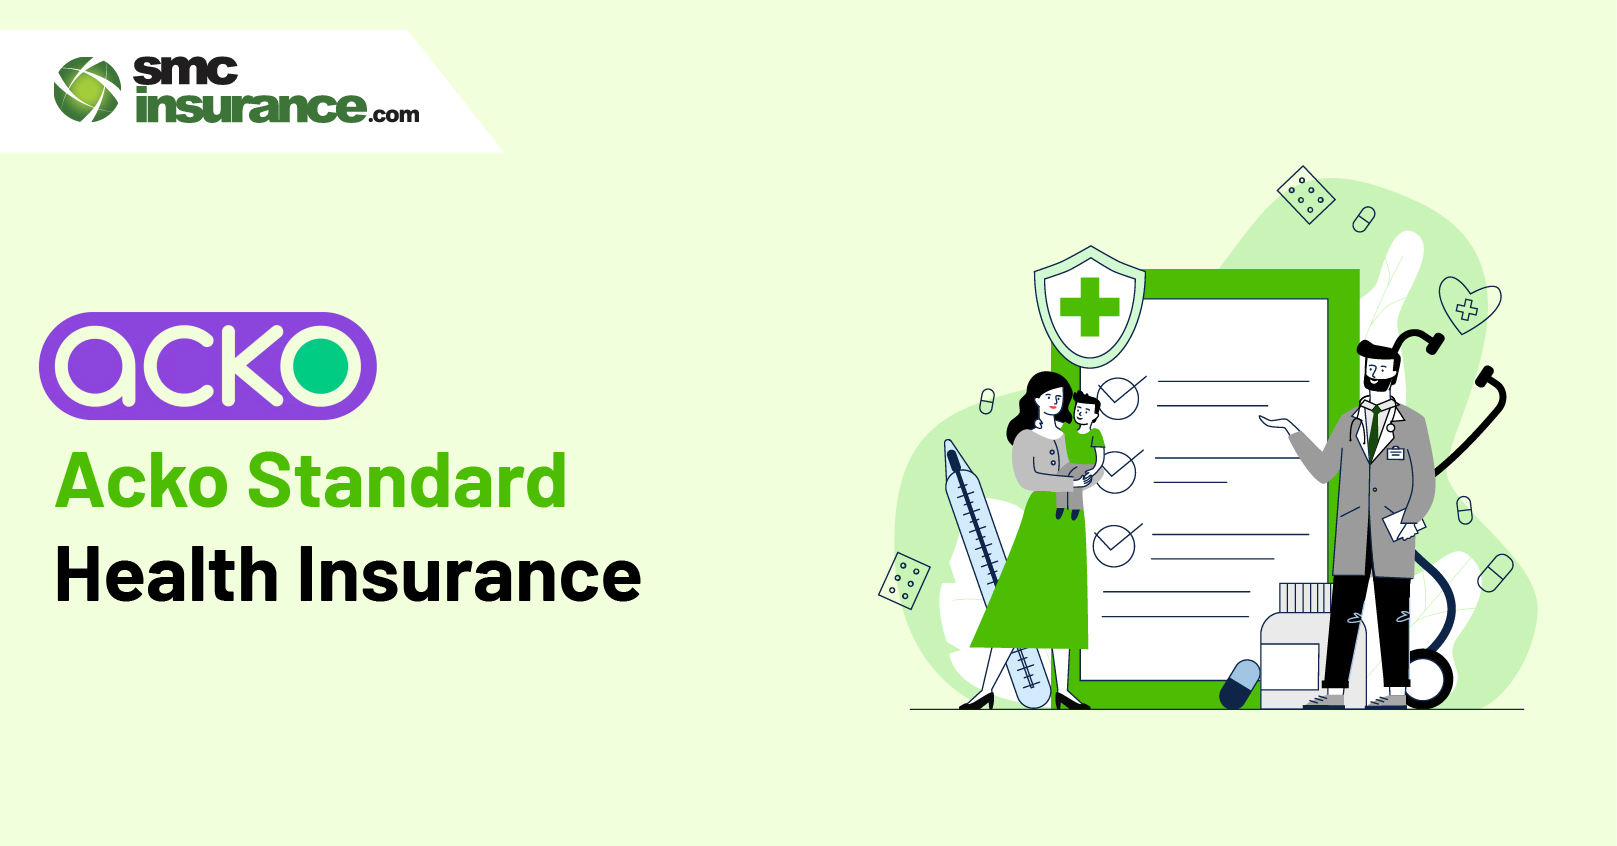 Acko Standard Health Insurance